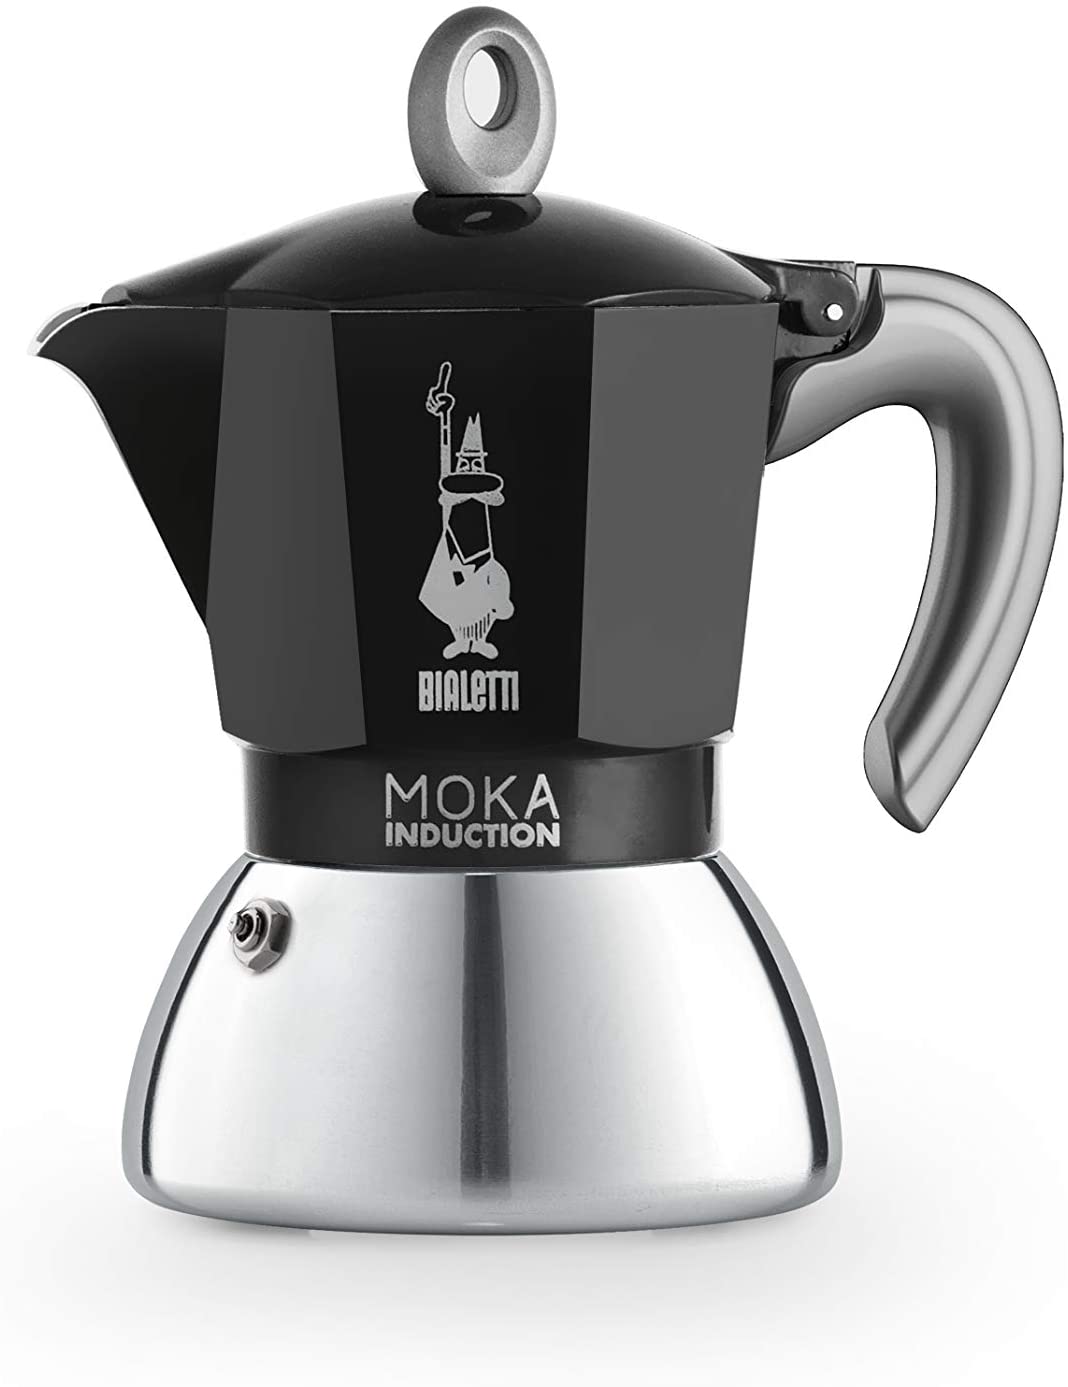 Bialetti New Moka Induction Coffee Maker